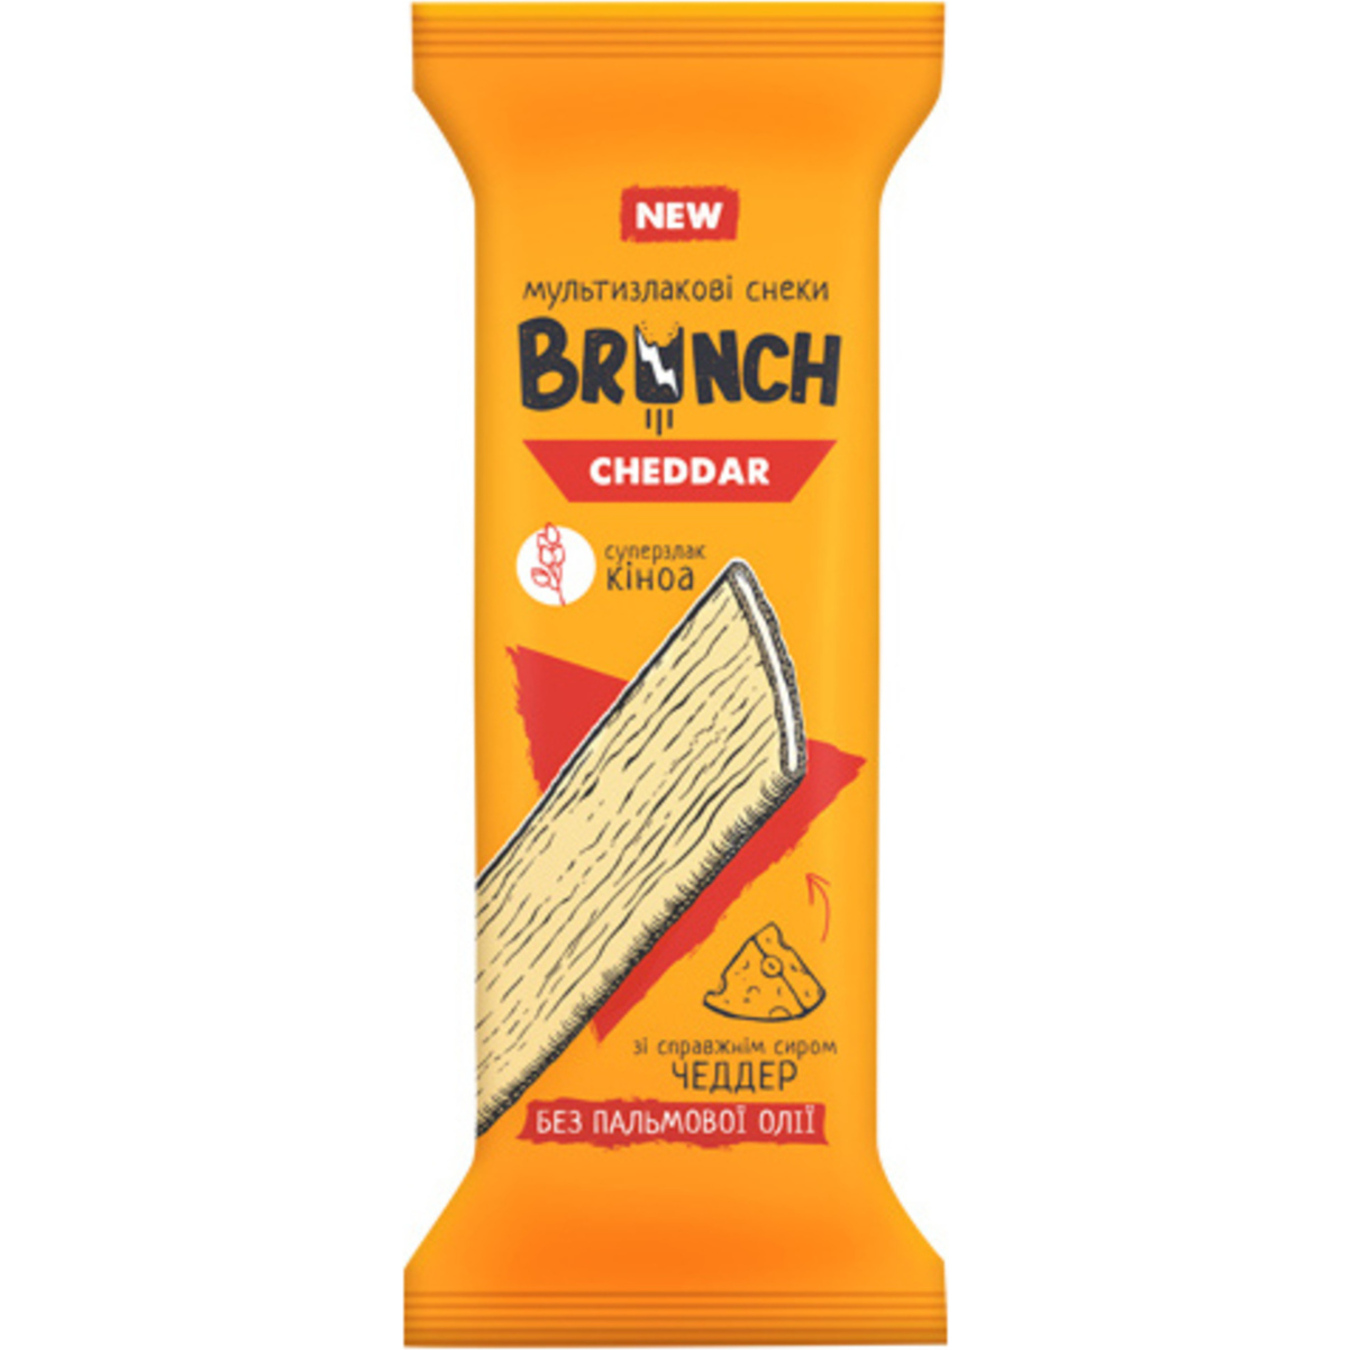 Brunch Cheddar Crispy Snack 47g